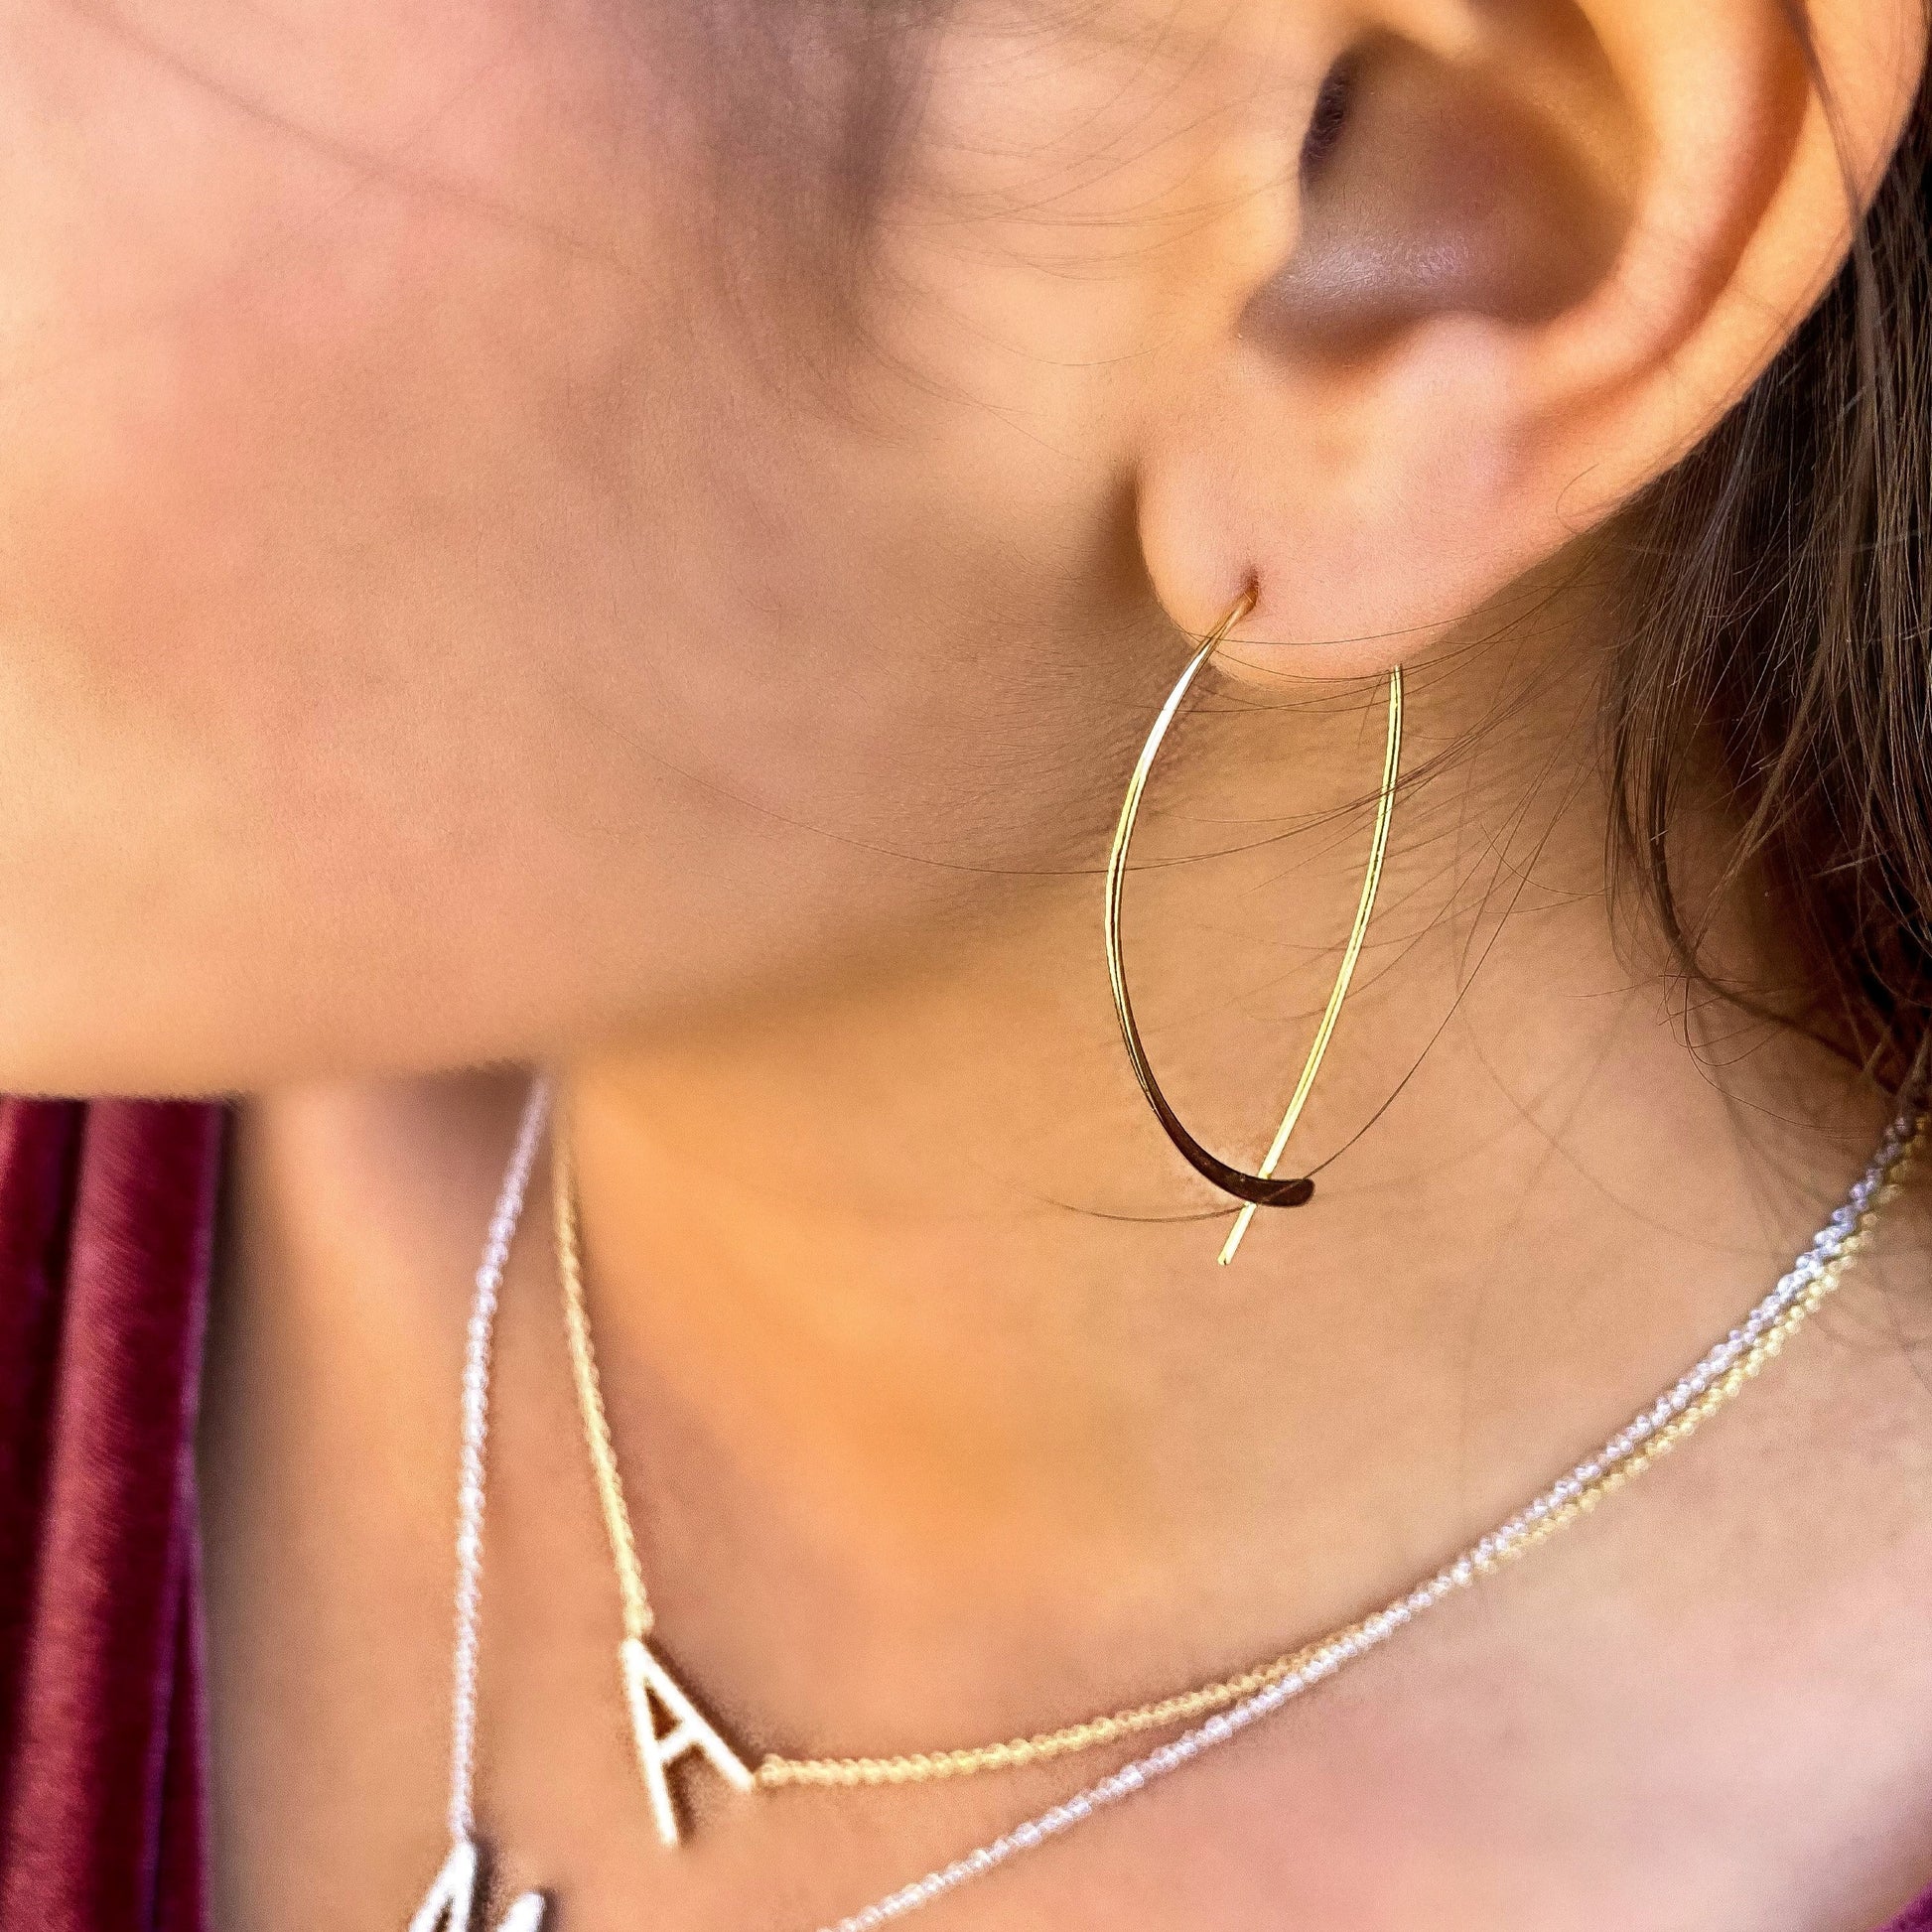 Wearing The Thin gold threader hoop earrings - Alexandra Marks Jewelry